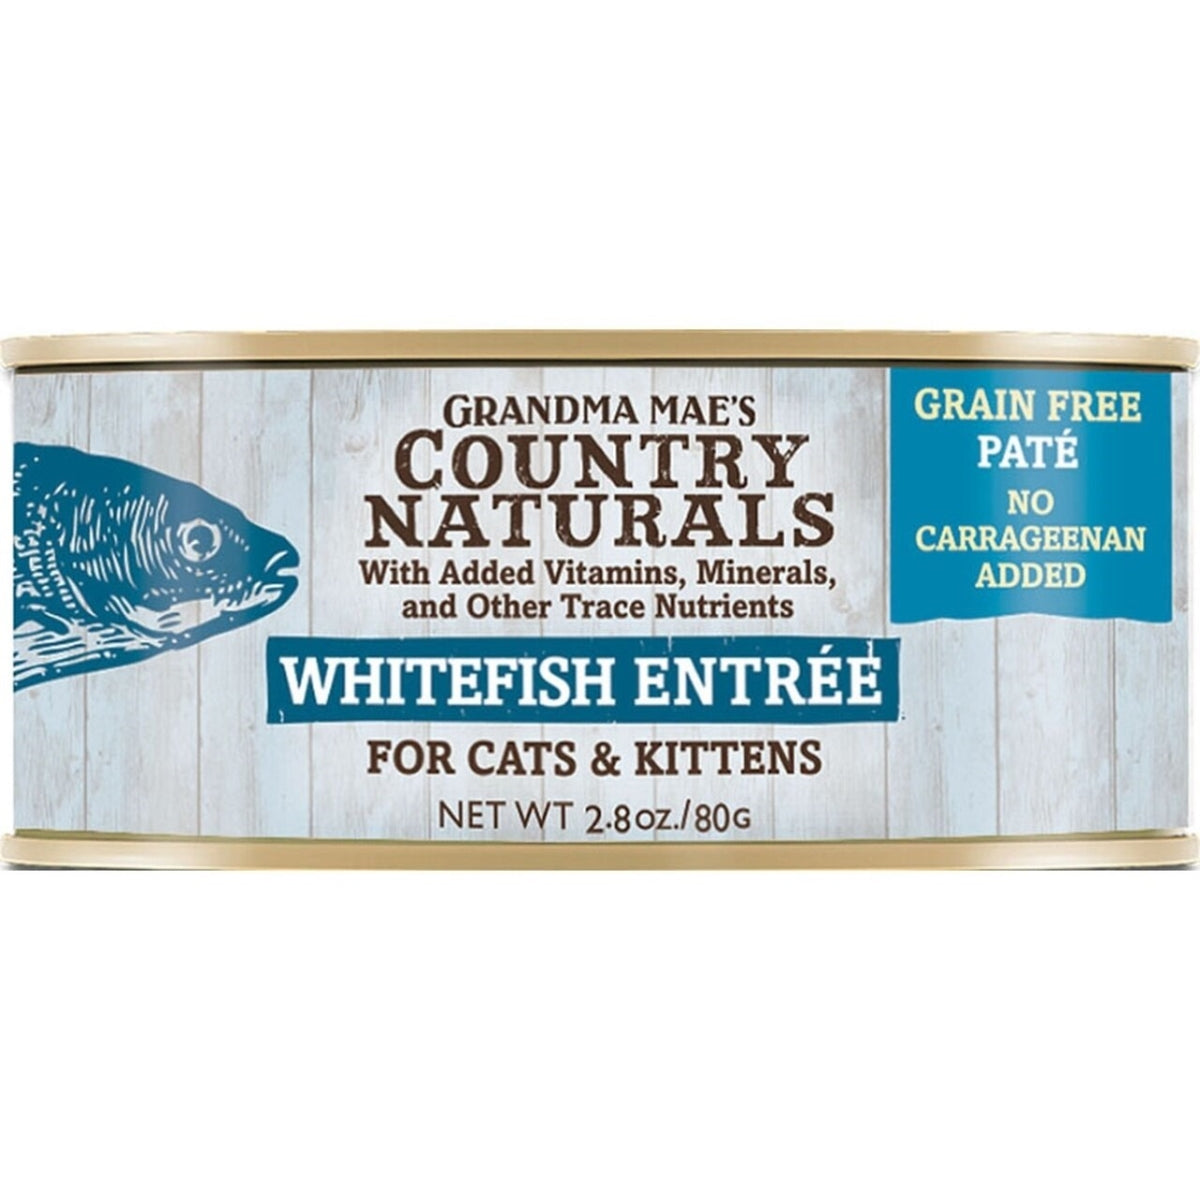 Grandma Mae's Country Naturals Cat Pate Grain-Free Whitefish - 2.8 Oz - Case of 24  